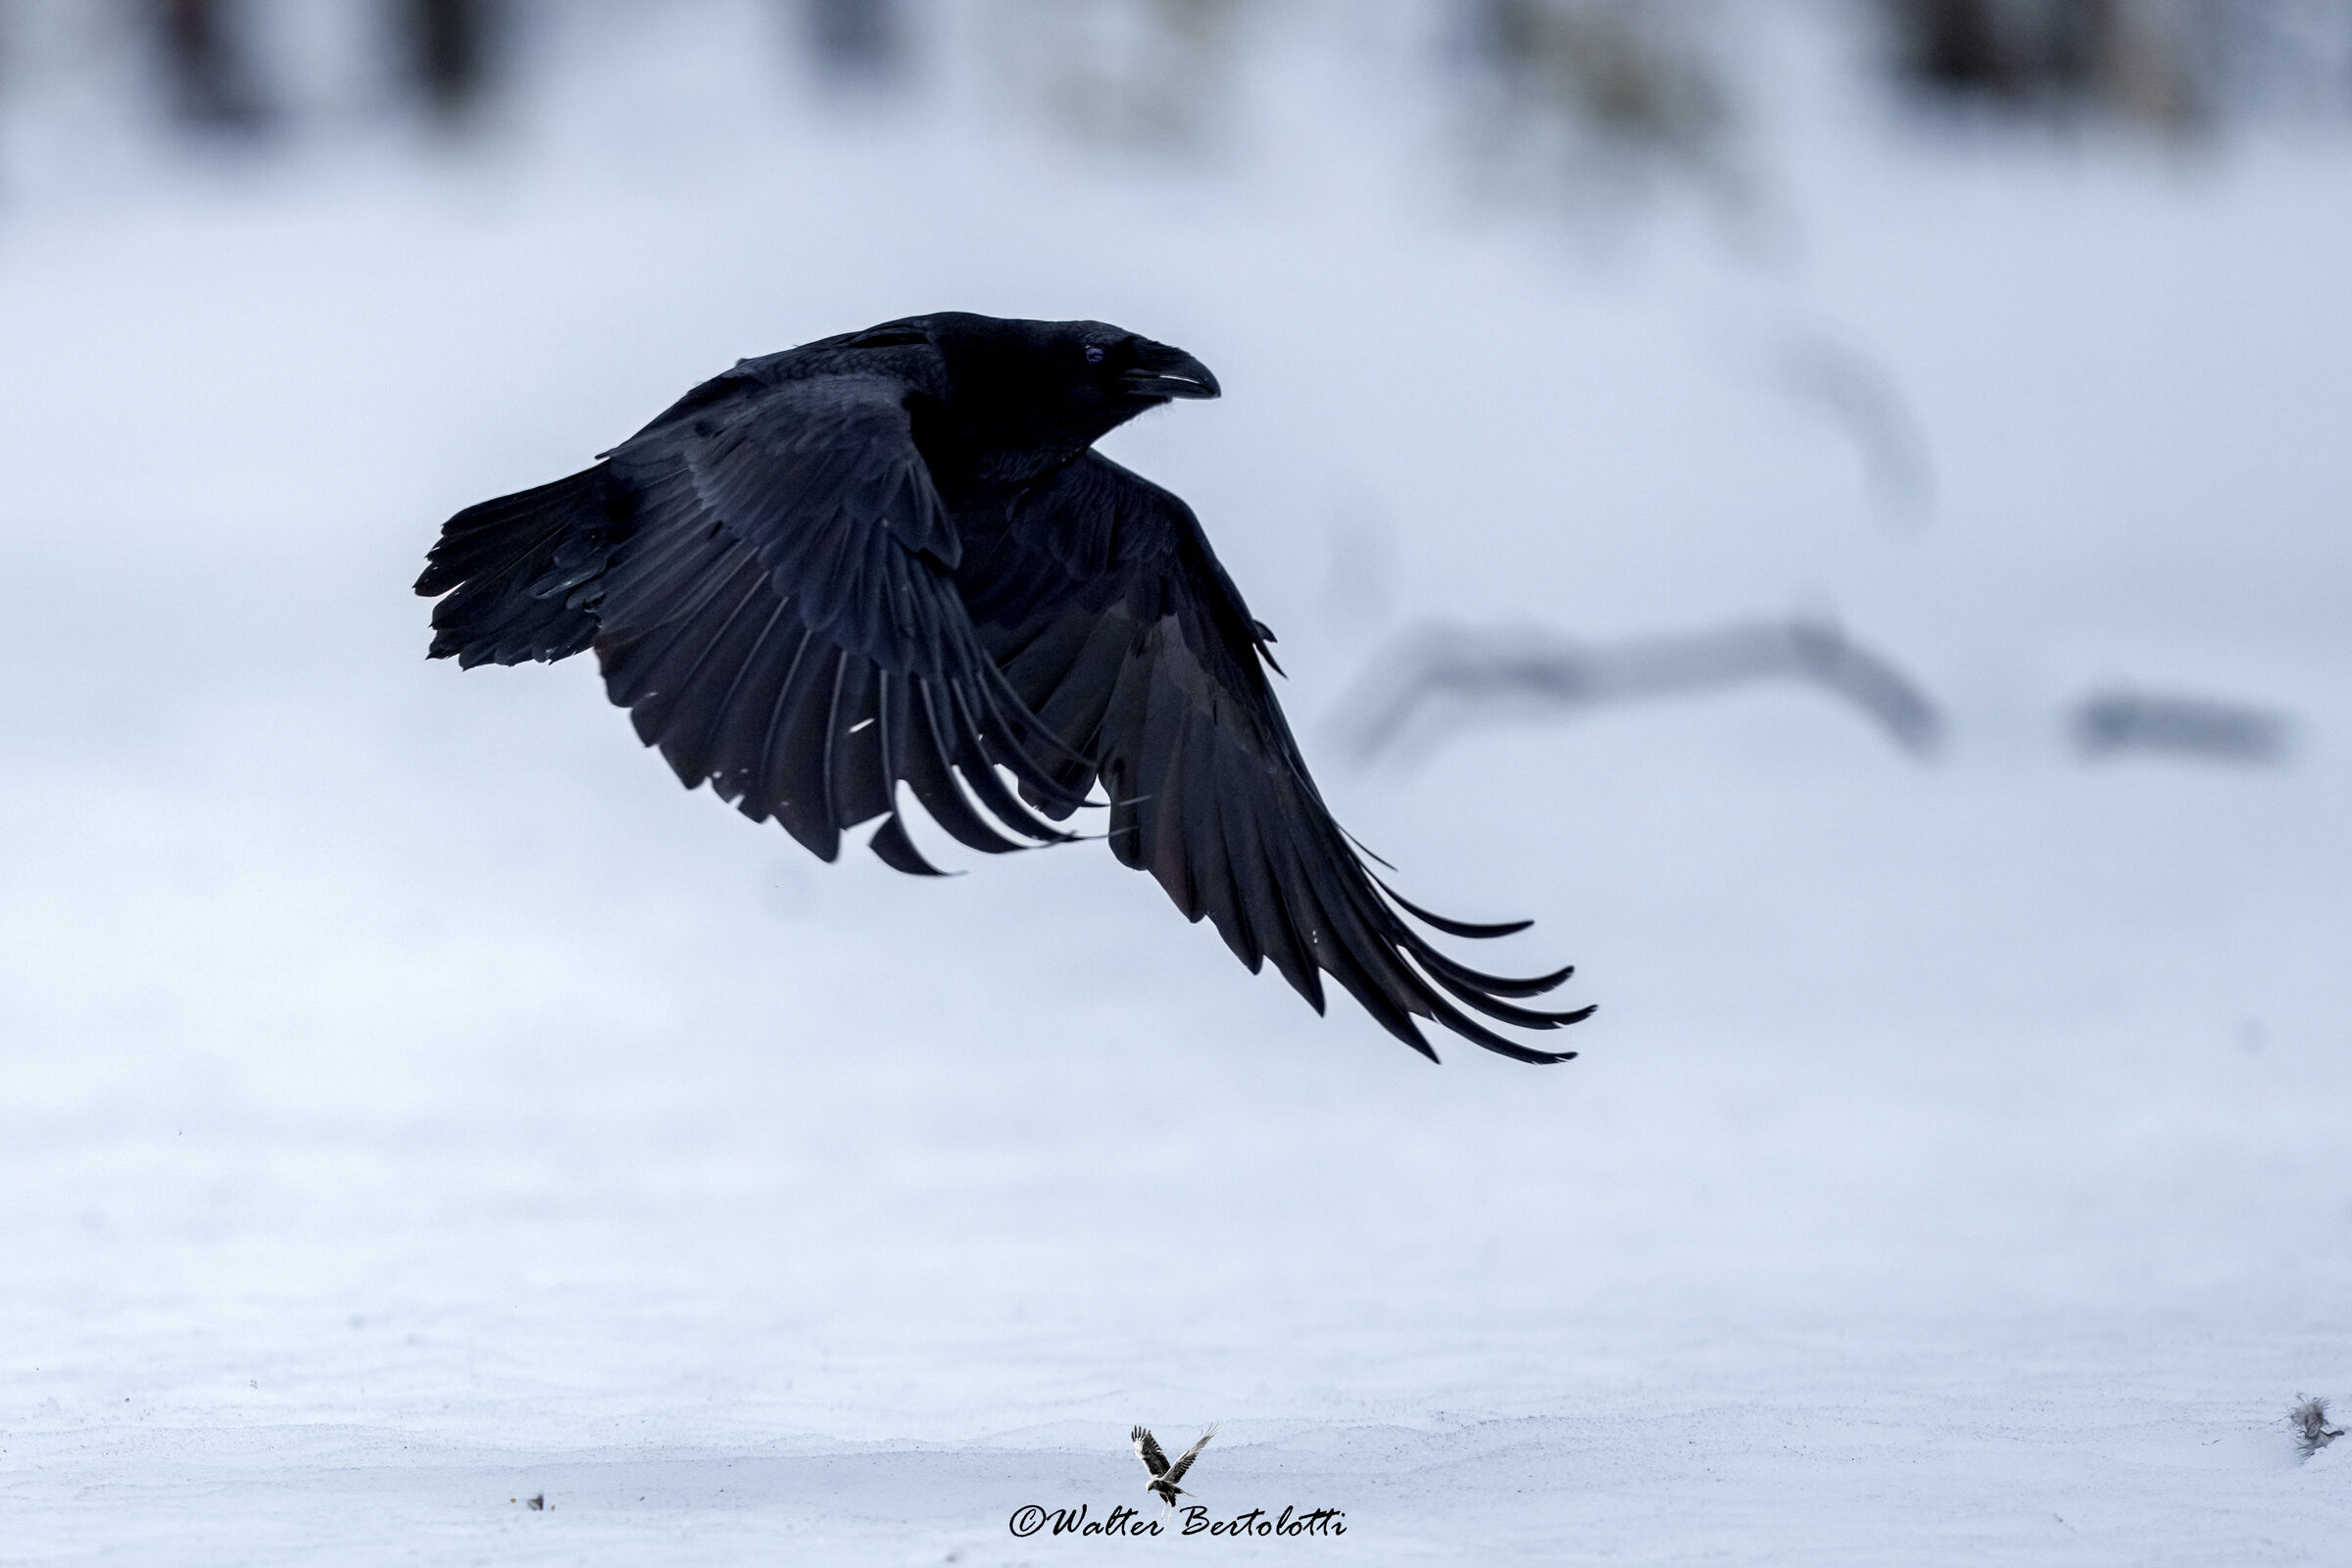 the crow ...